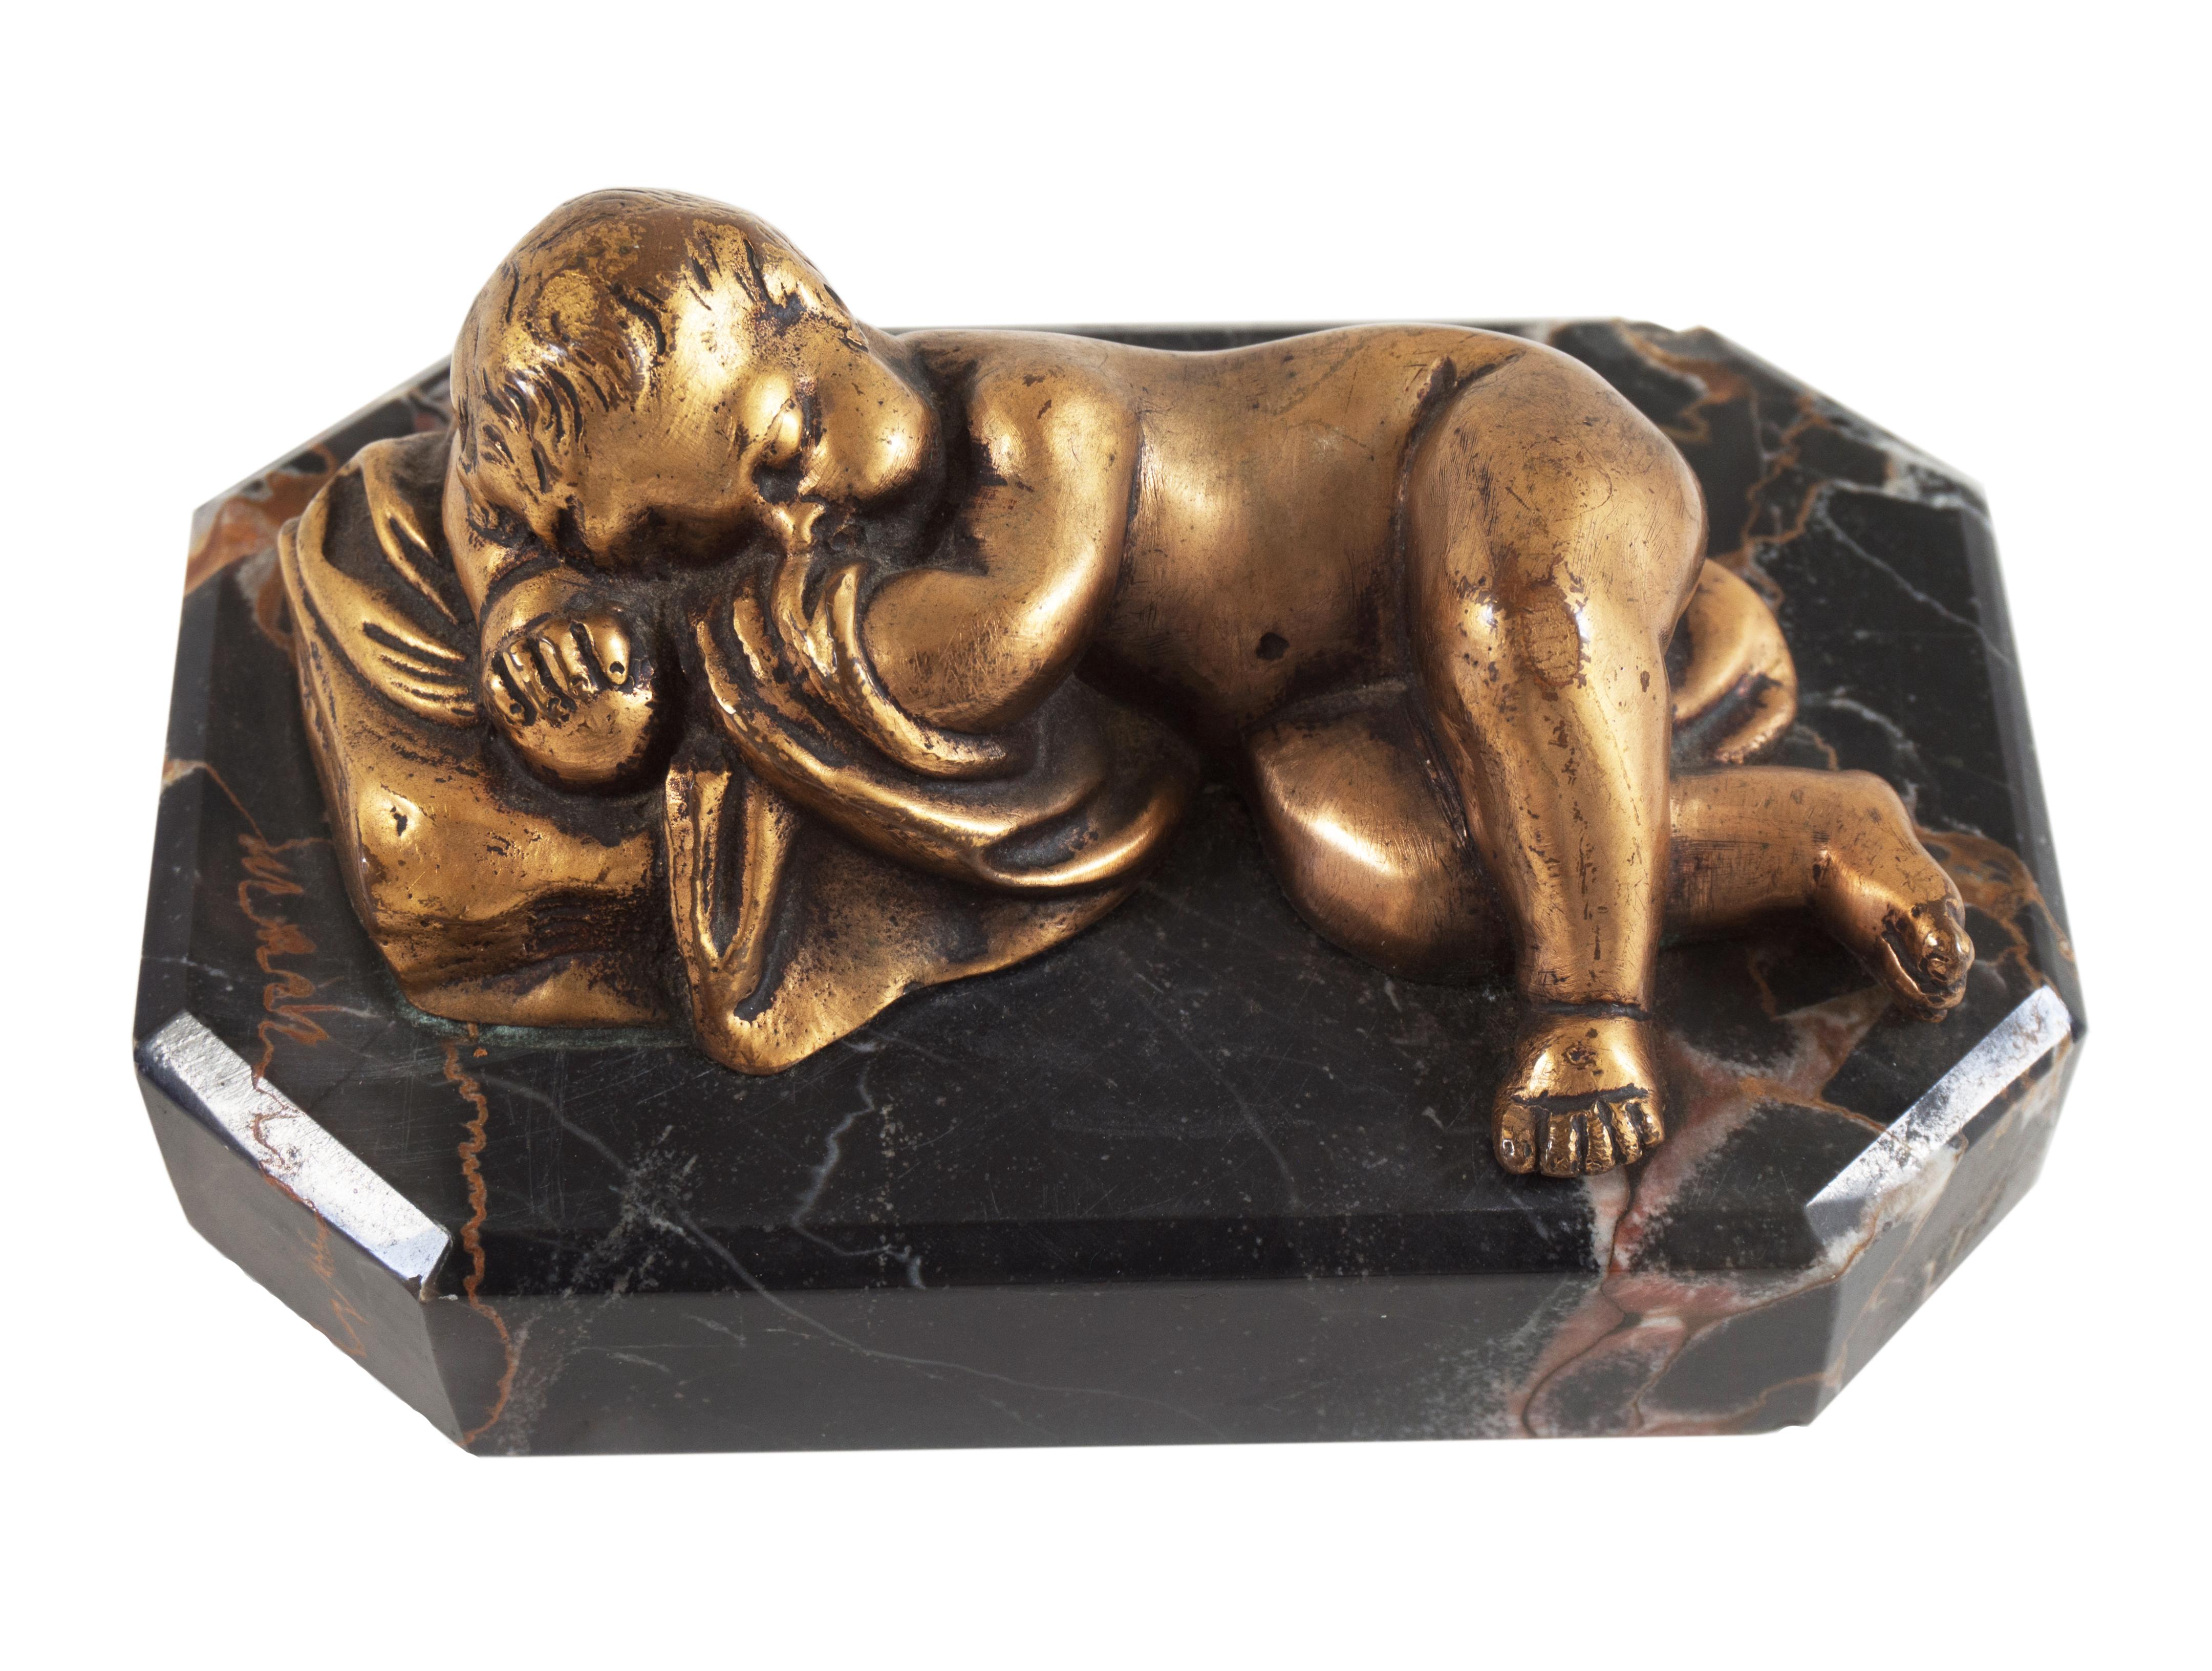  'Sleeping Cherub' Small Beaux Arts gilt-bronze sculpture on Portoro Marble Base - Realist Sculpture by Unknown